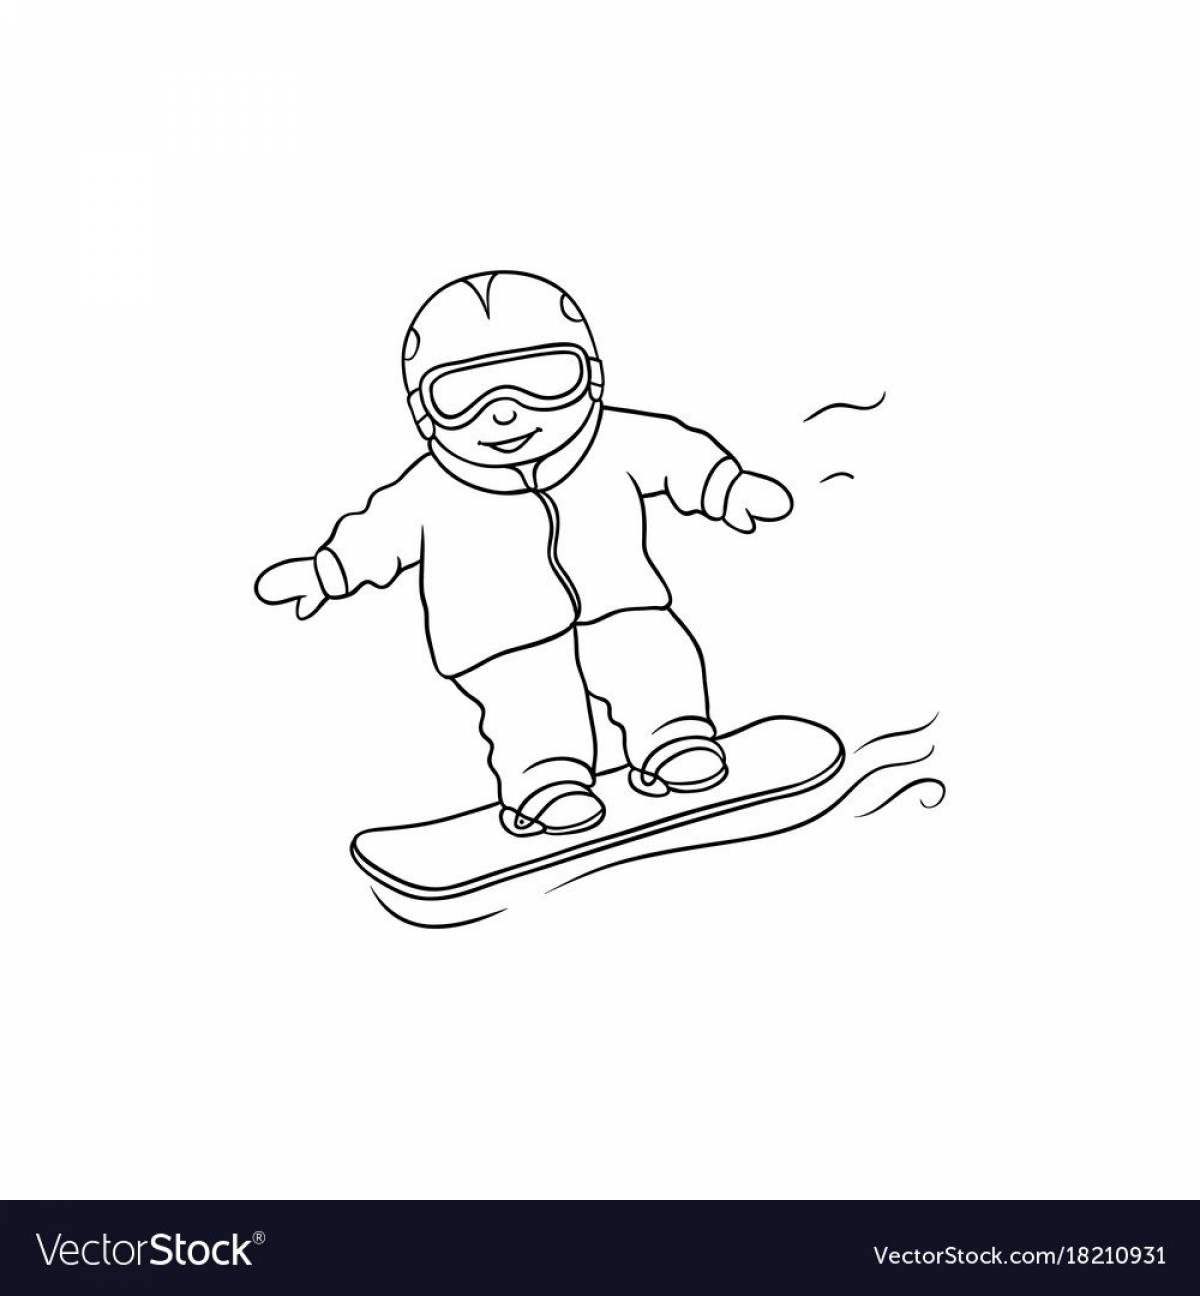 Snowboarder for kids #3